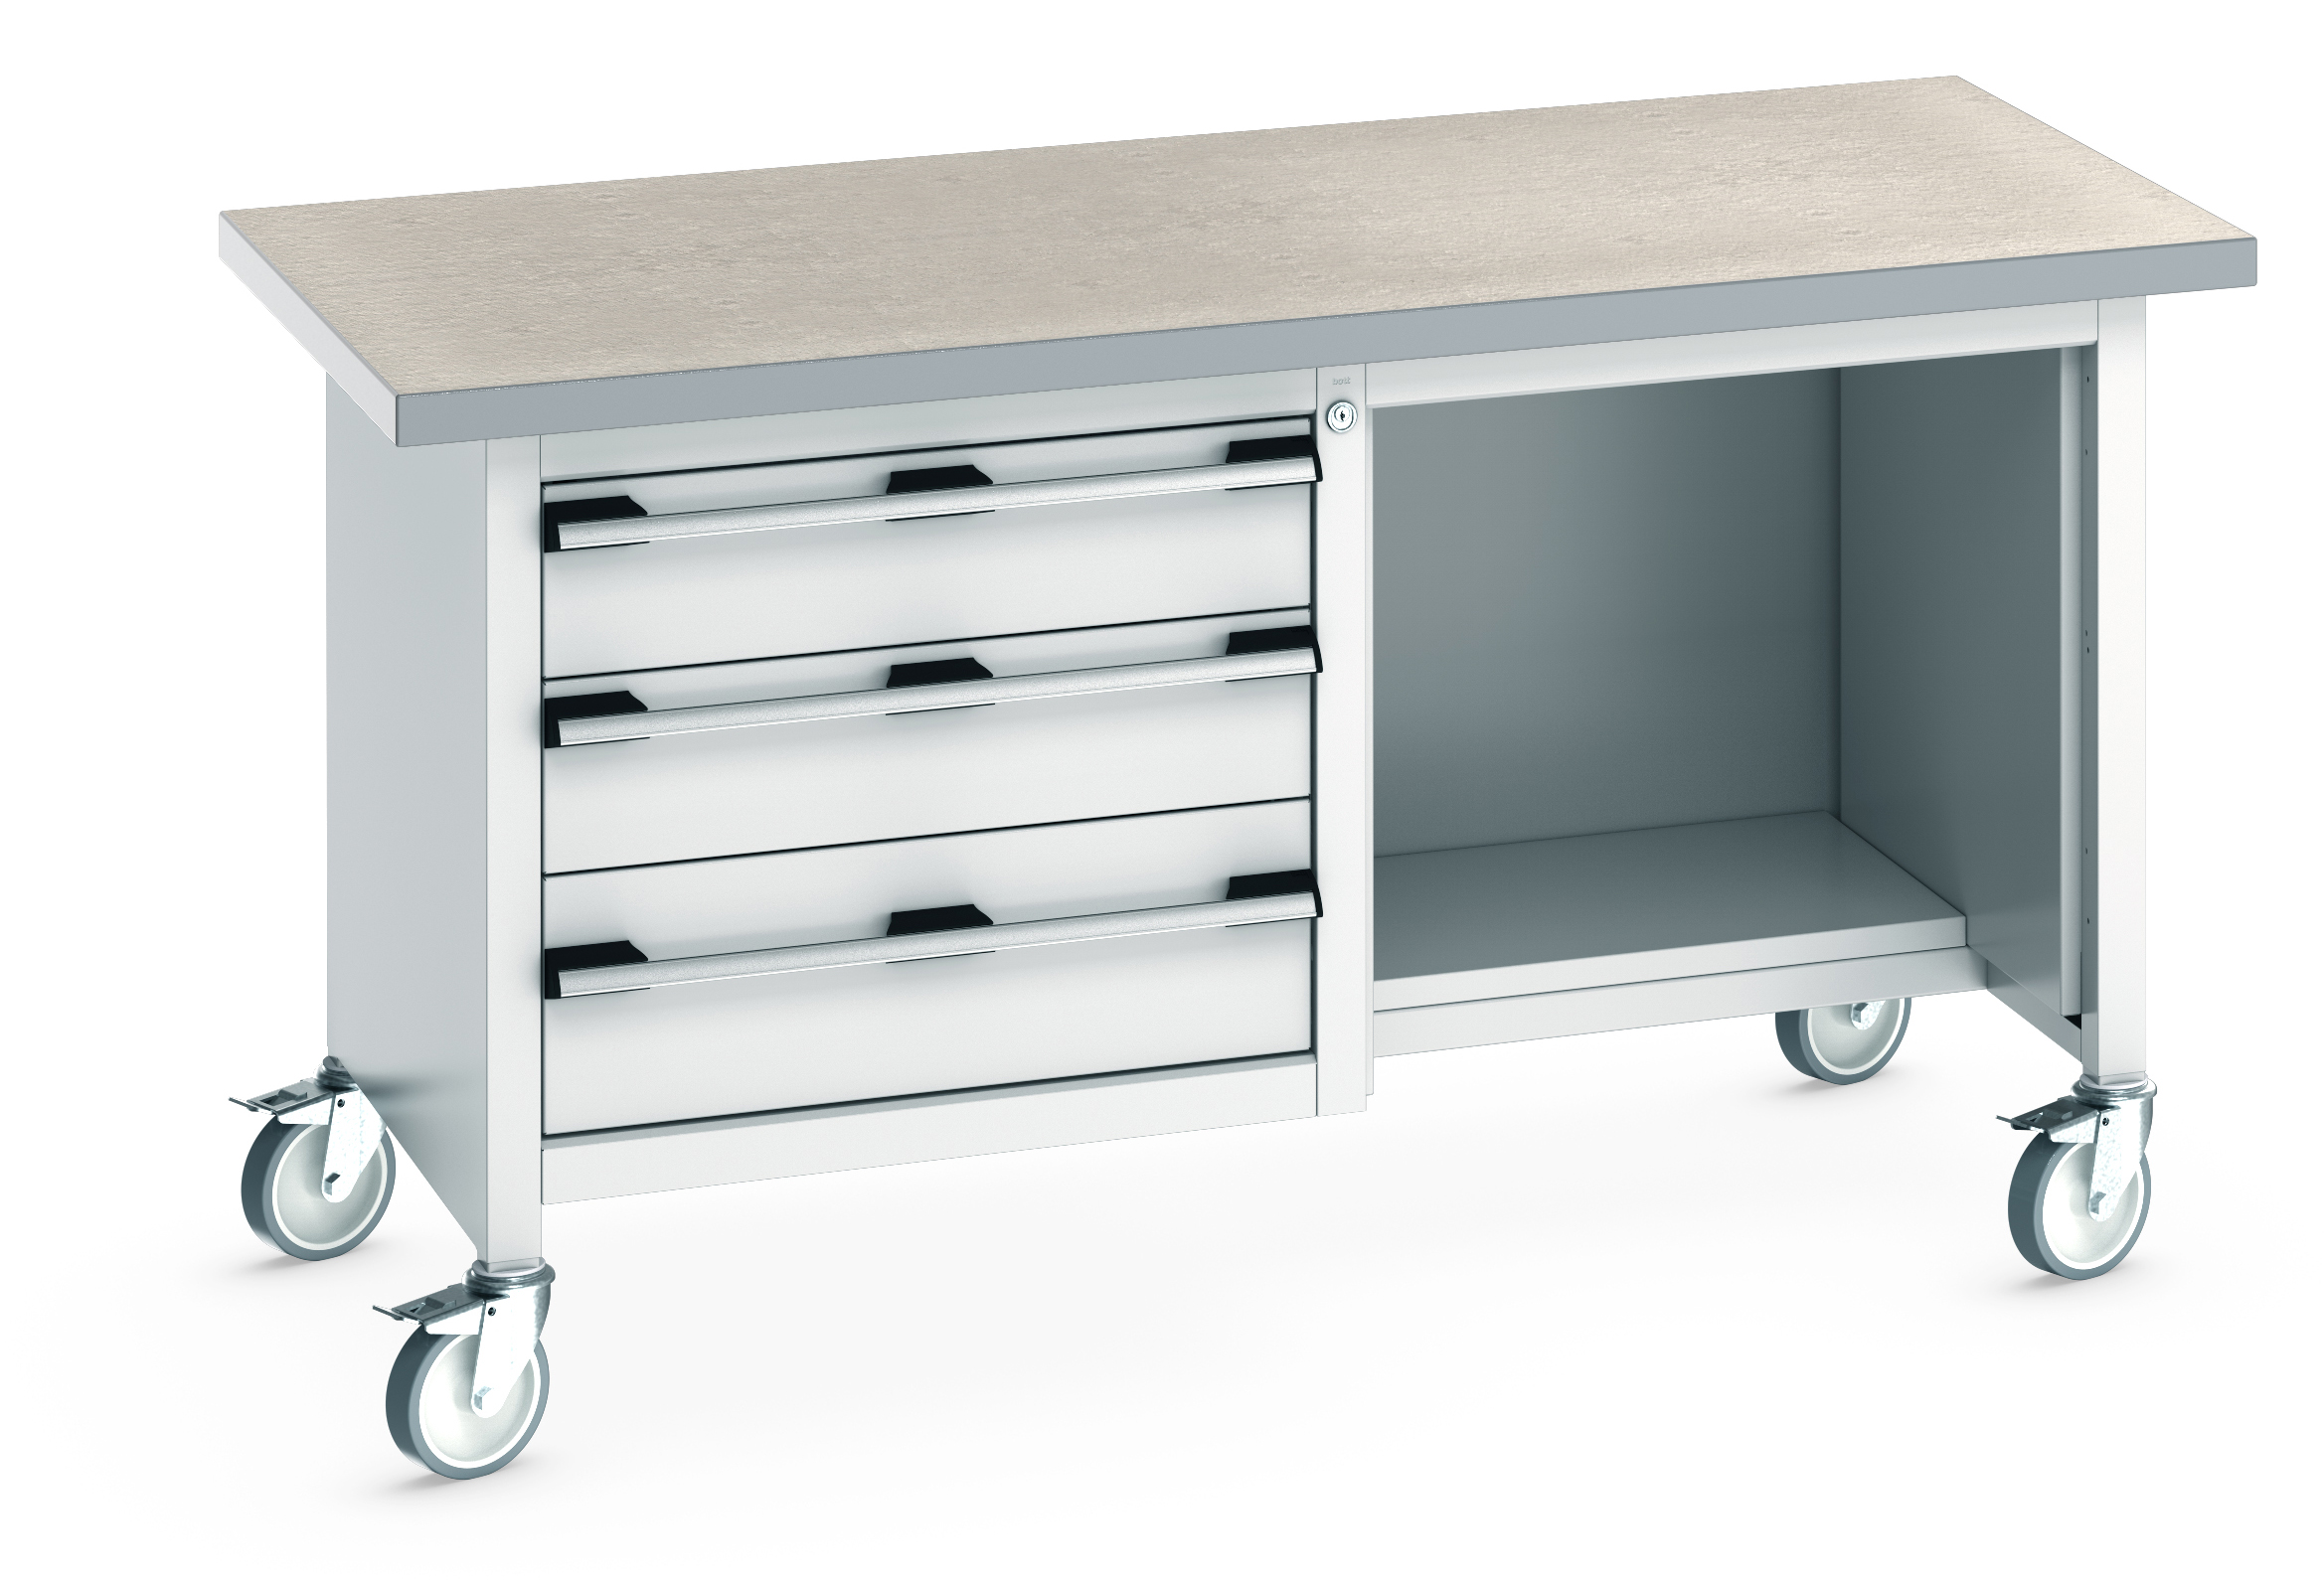 Bott Cubio Mobile Storage Bench With 3 Drawer Cabinet / Open With Half Depth Base Shelf - 41002117.16V